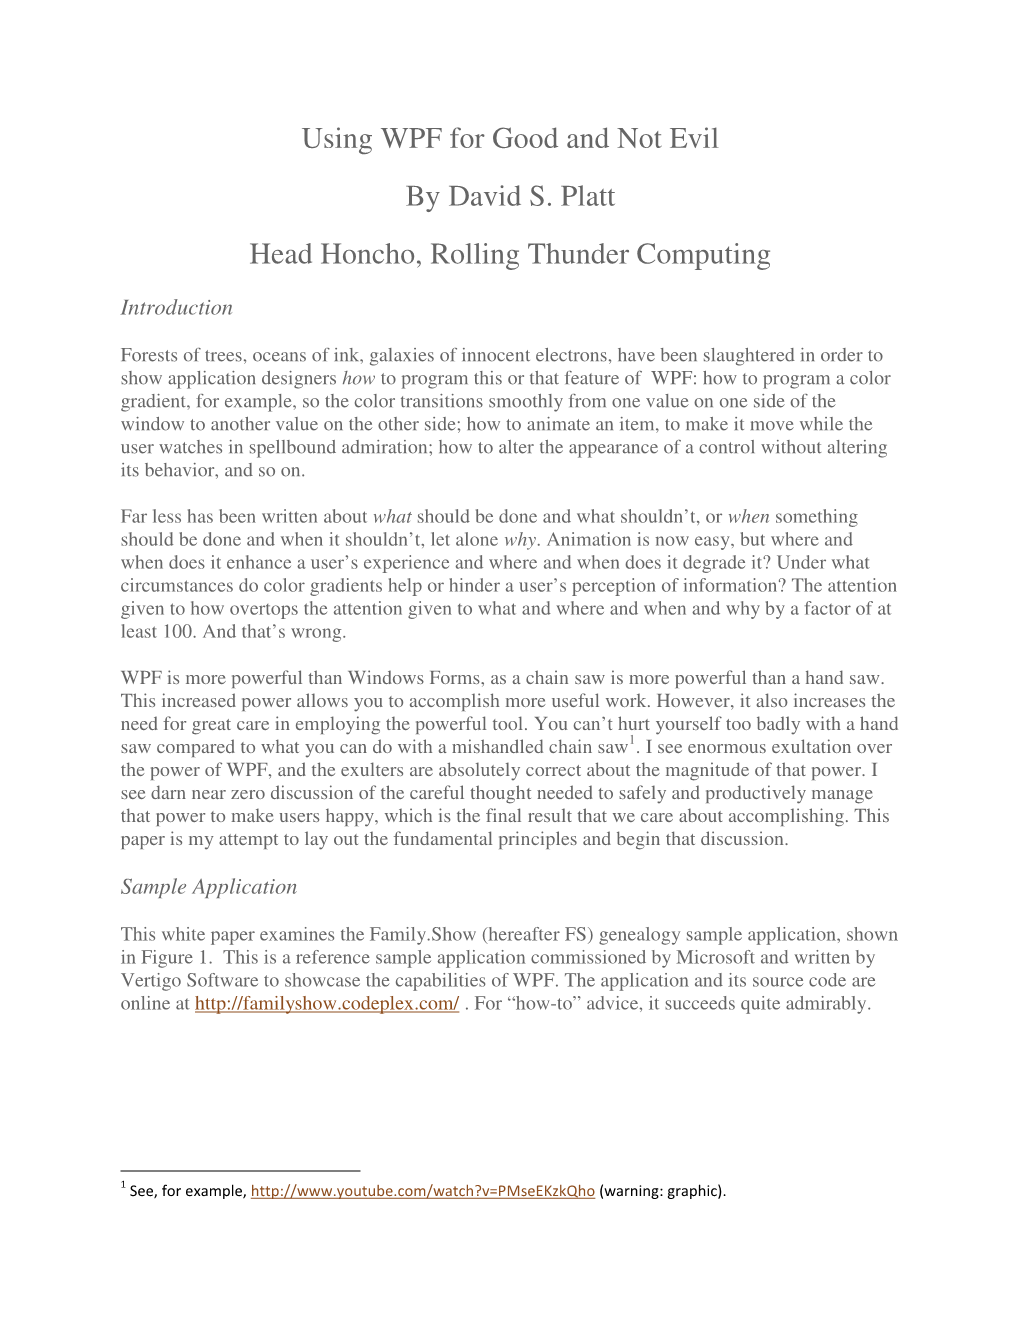 Using WPF for Good and Not Evil by David S. Platt Head Honcho, Rolling Thunder Computing